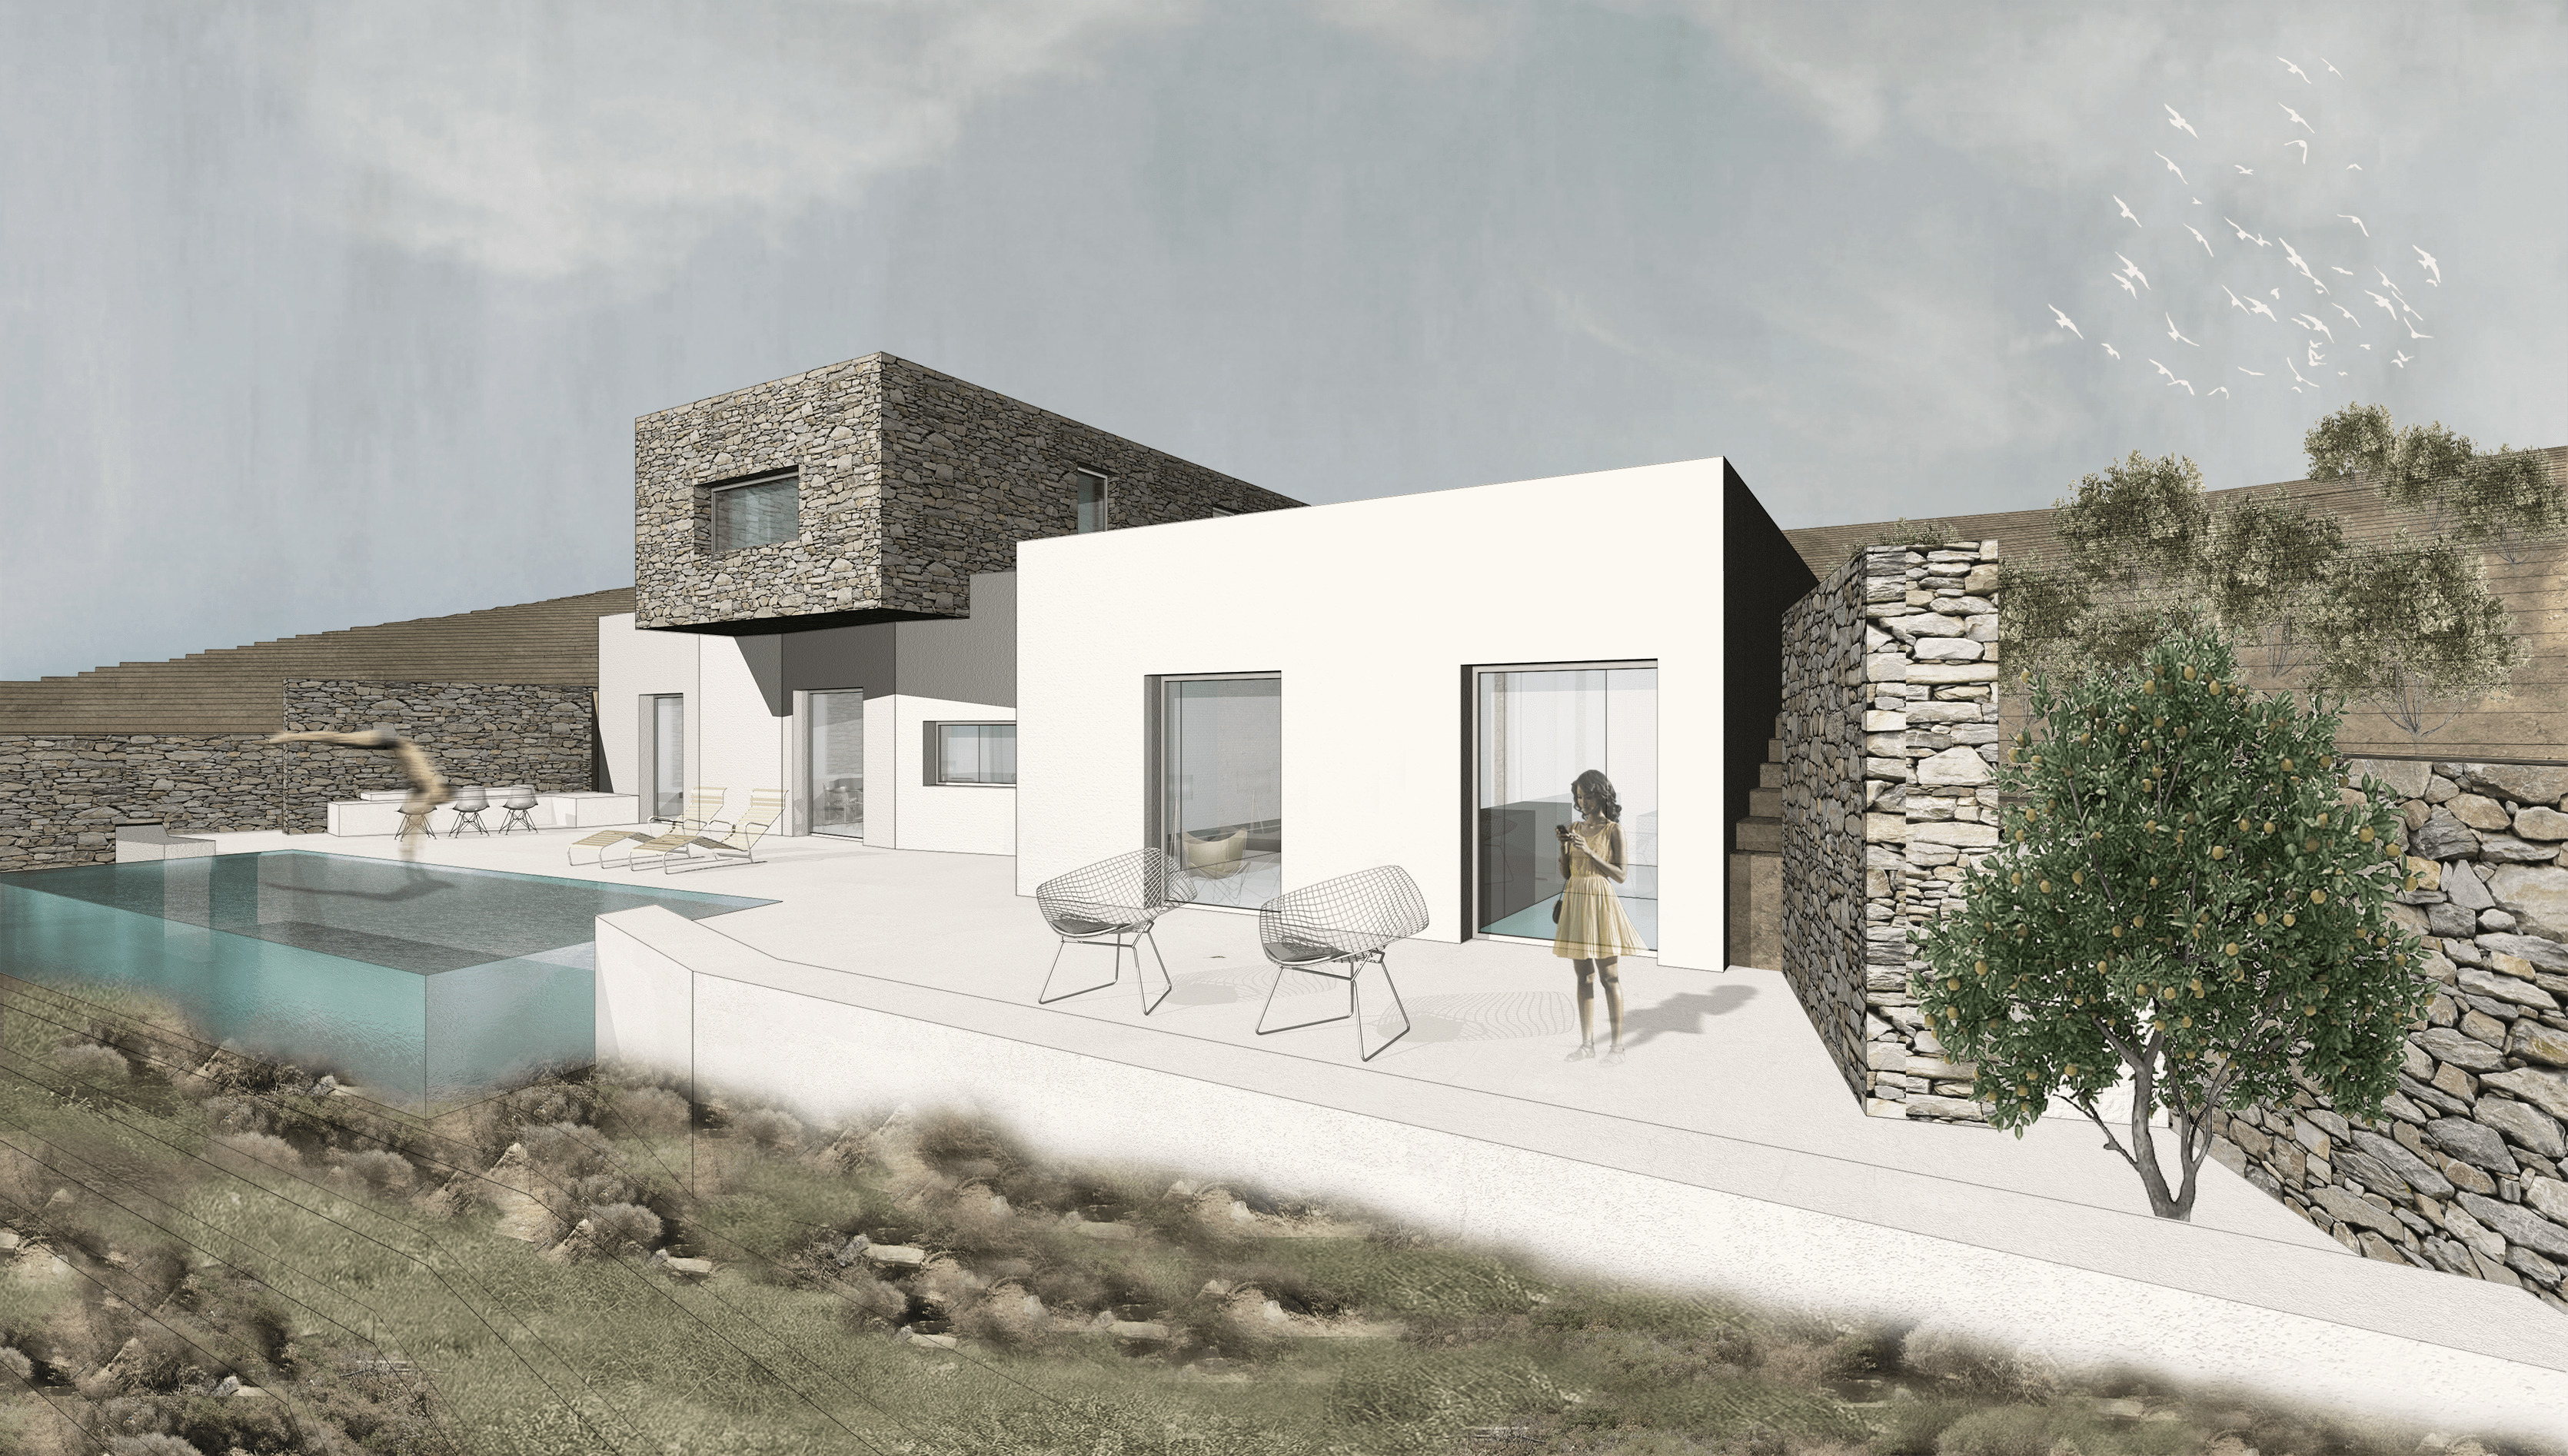 Evripiotis Architects--Elea Eco-Resort, Mykonos Island